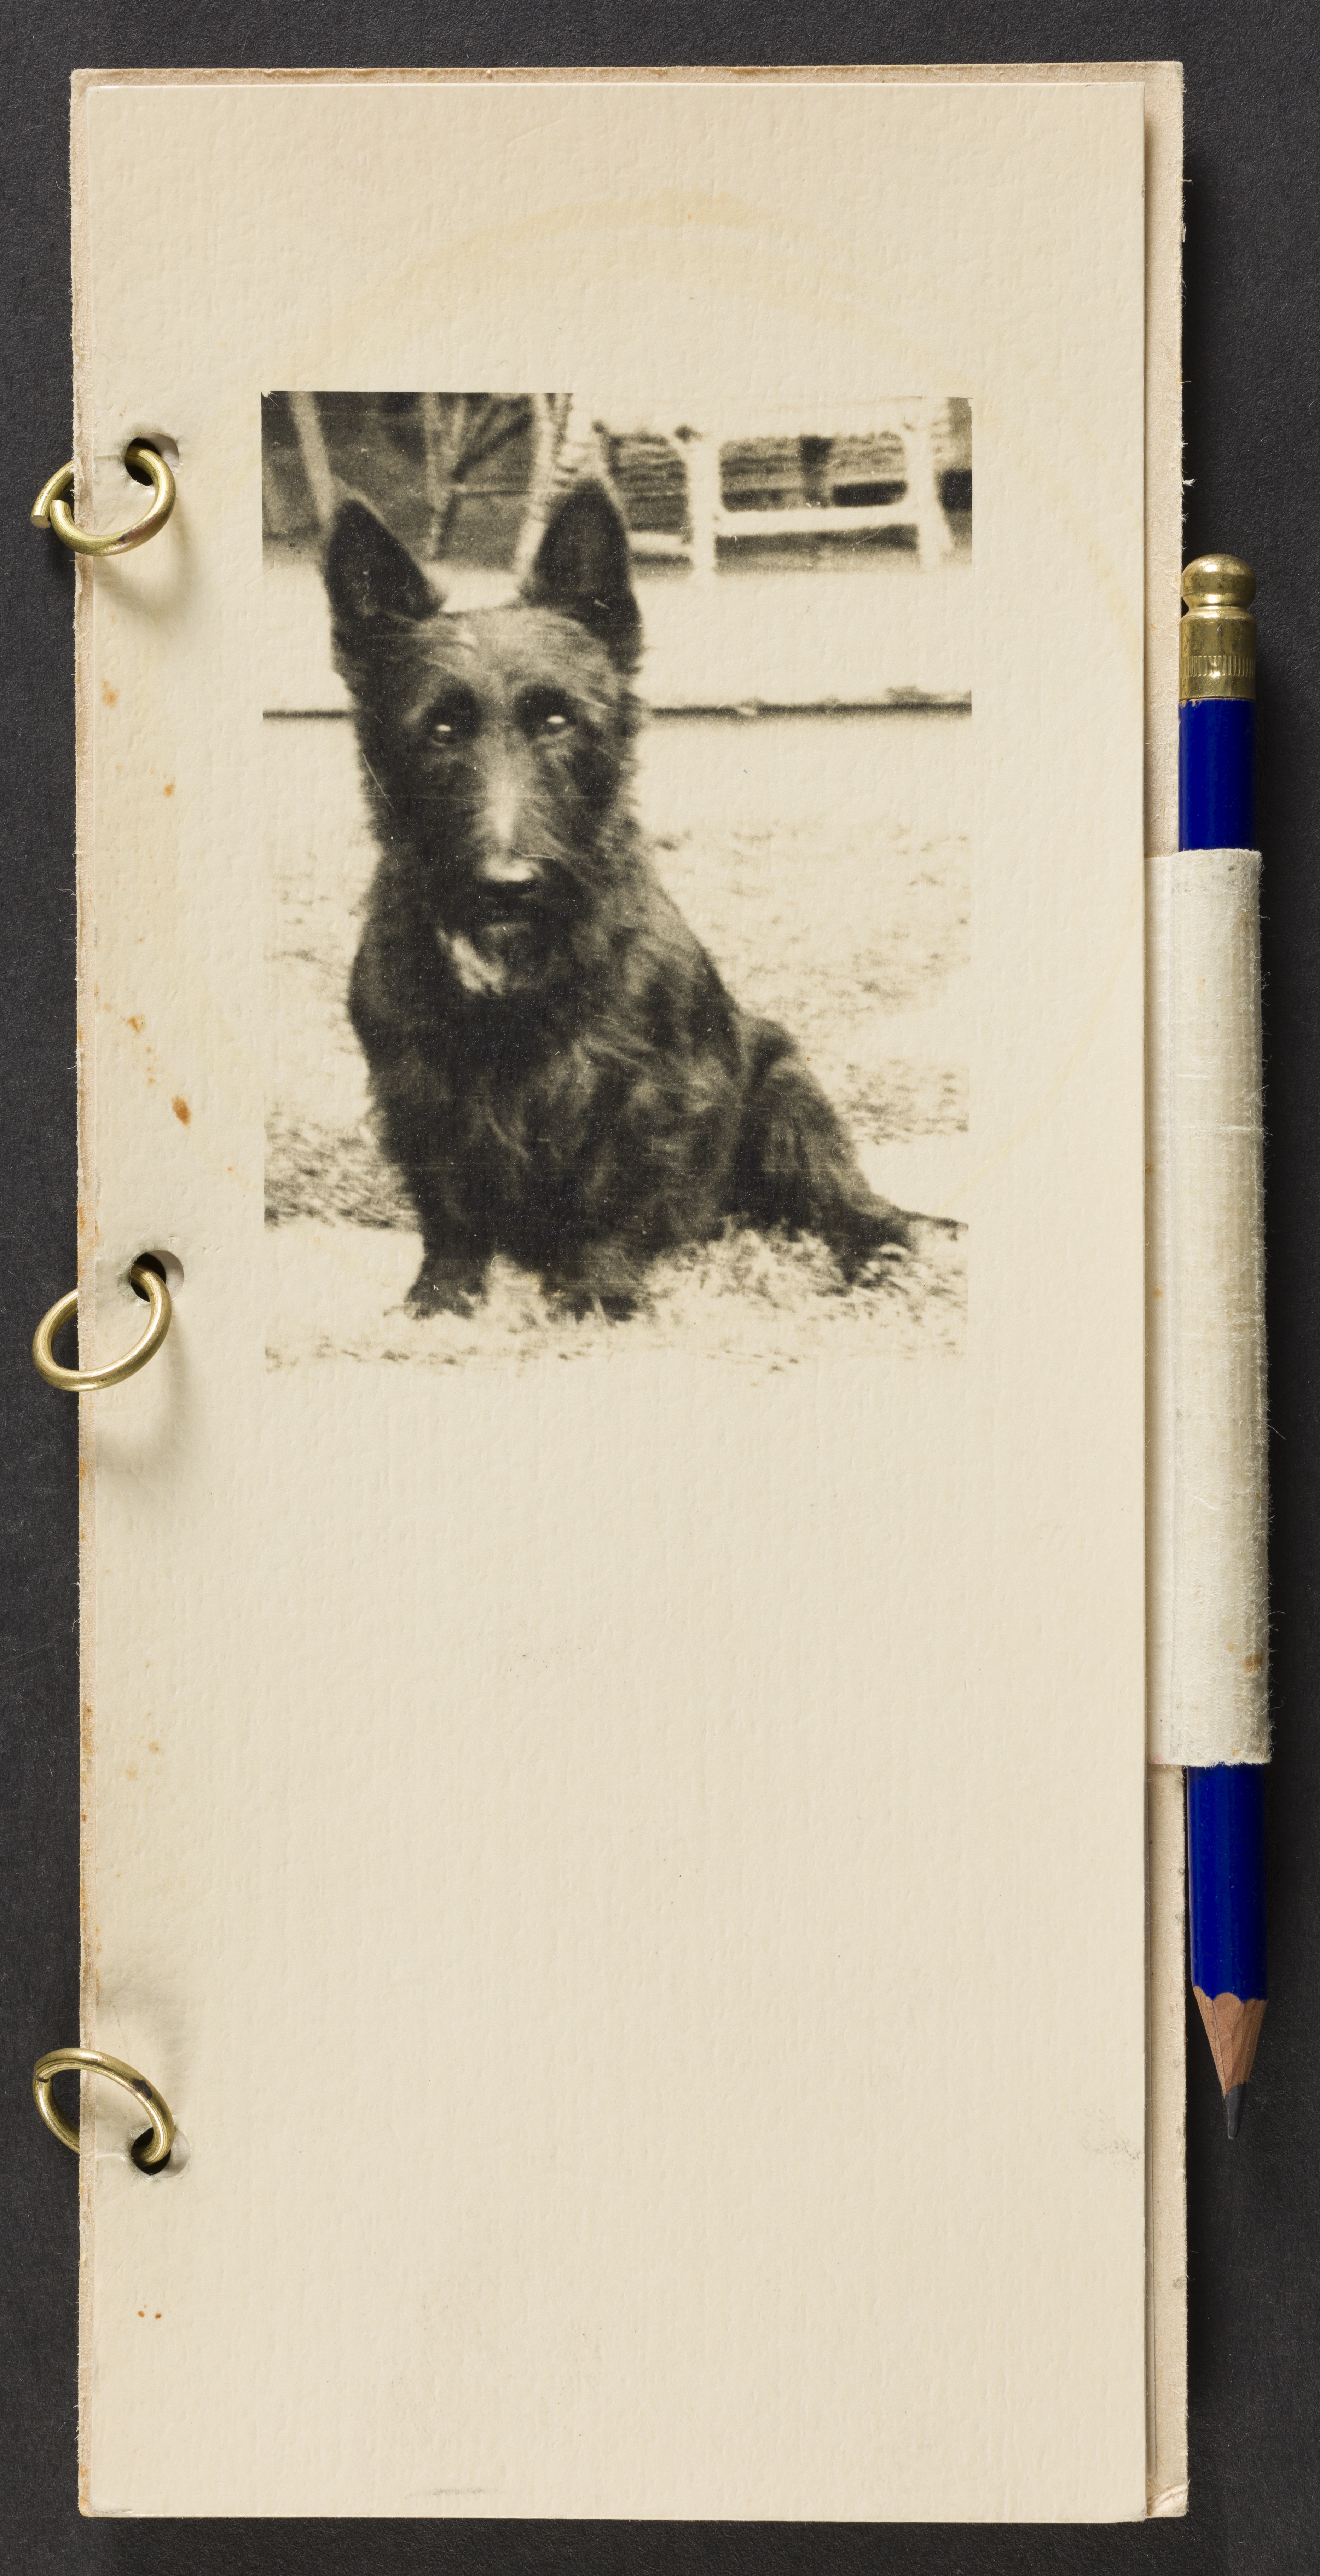 Bridge scorecard holder with Scottish Terrier dog